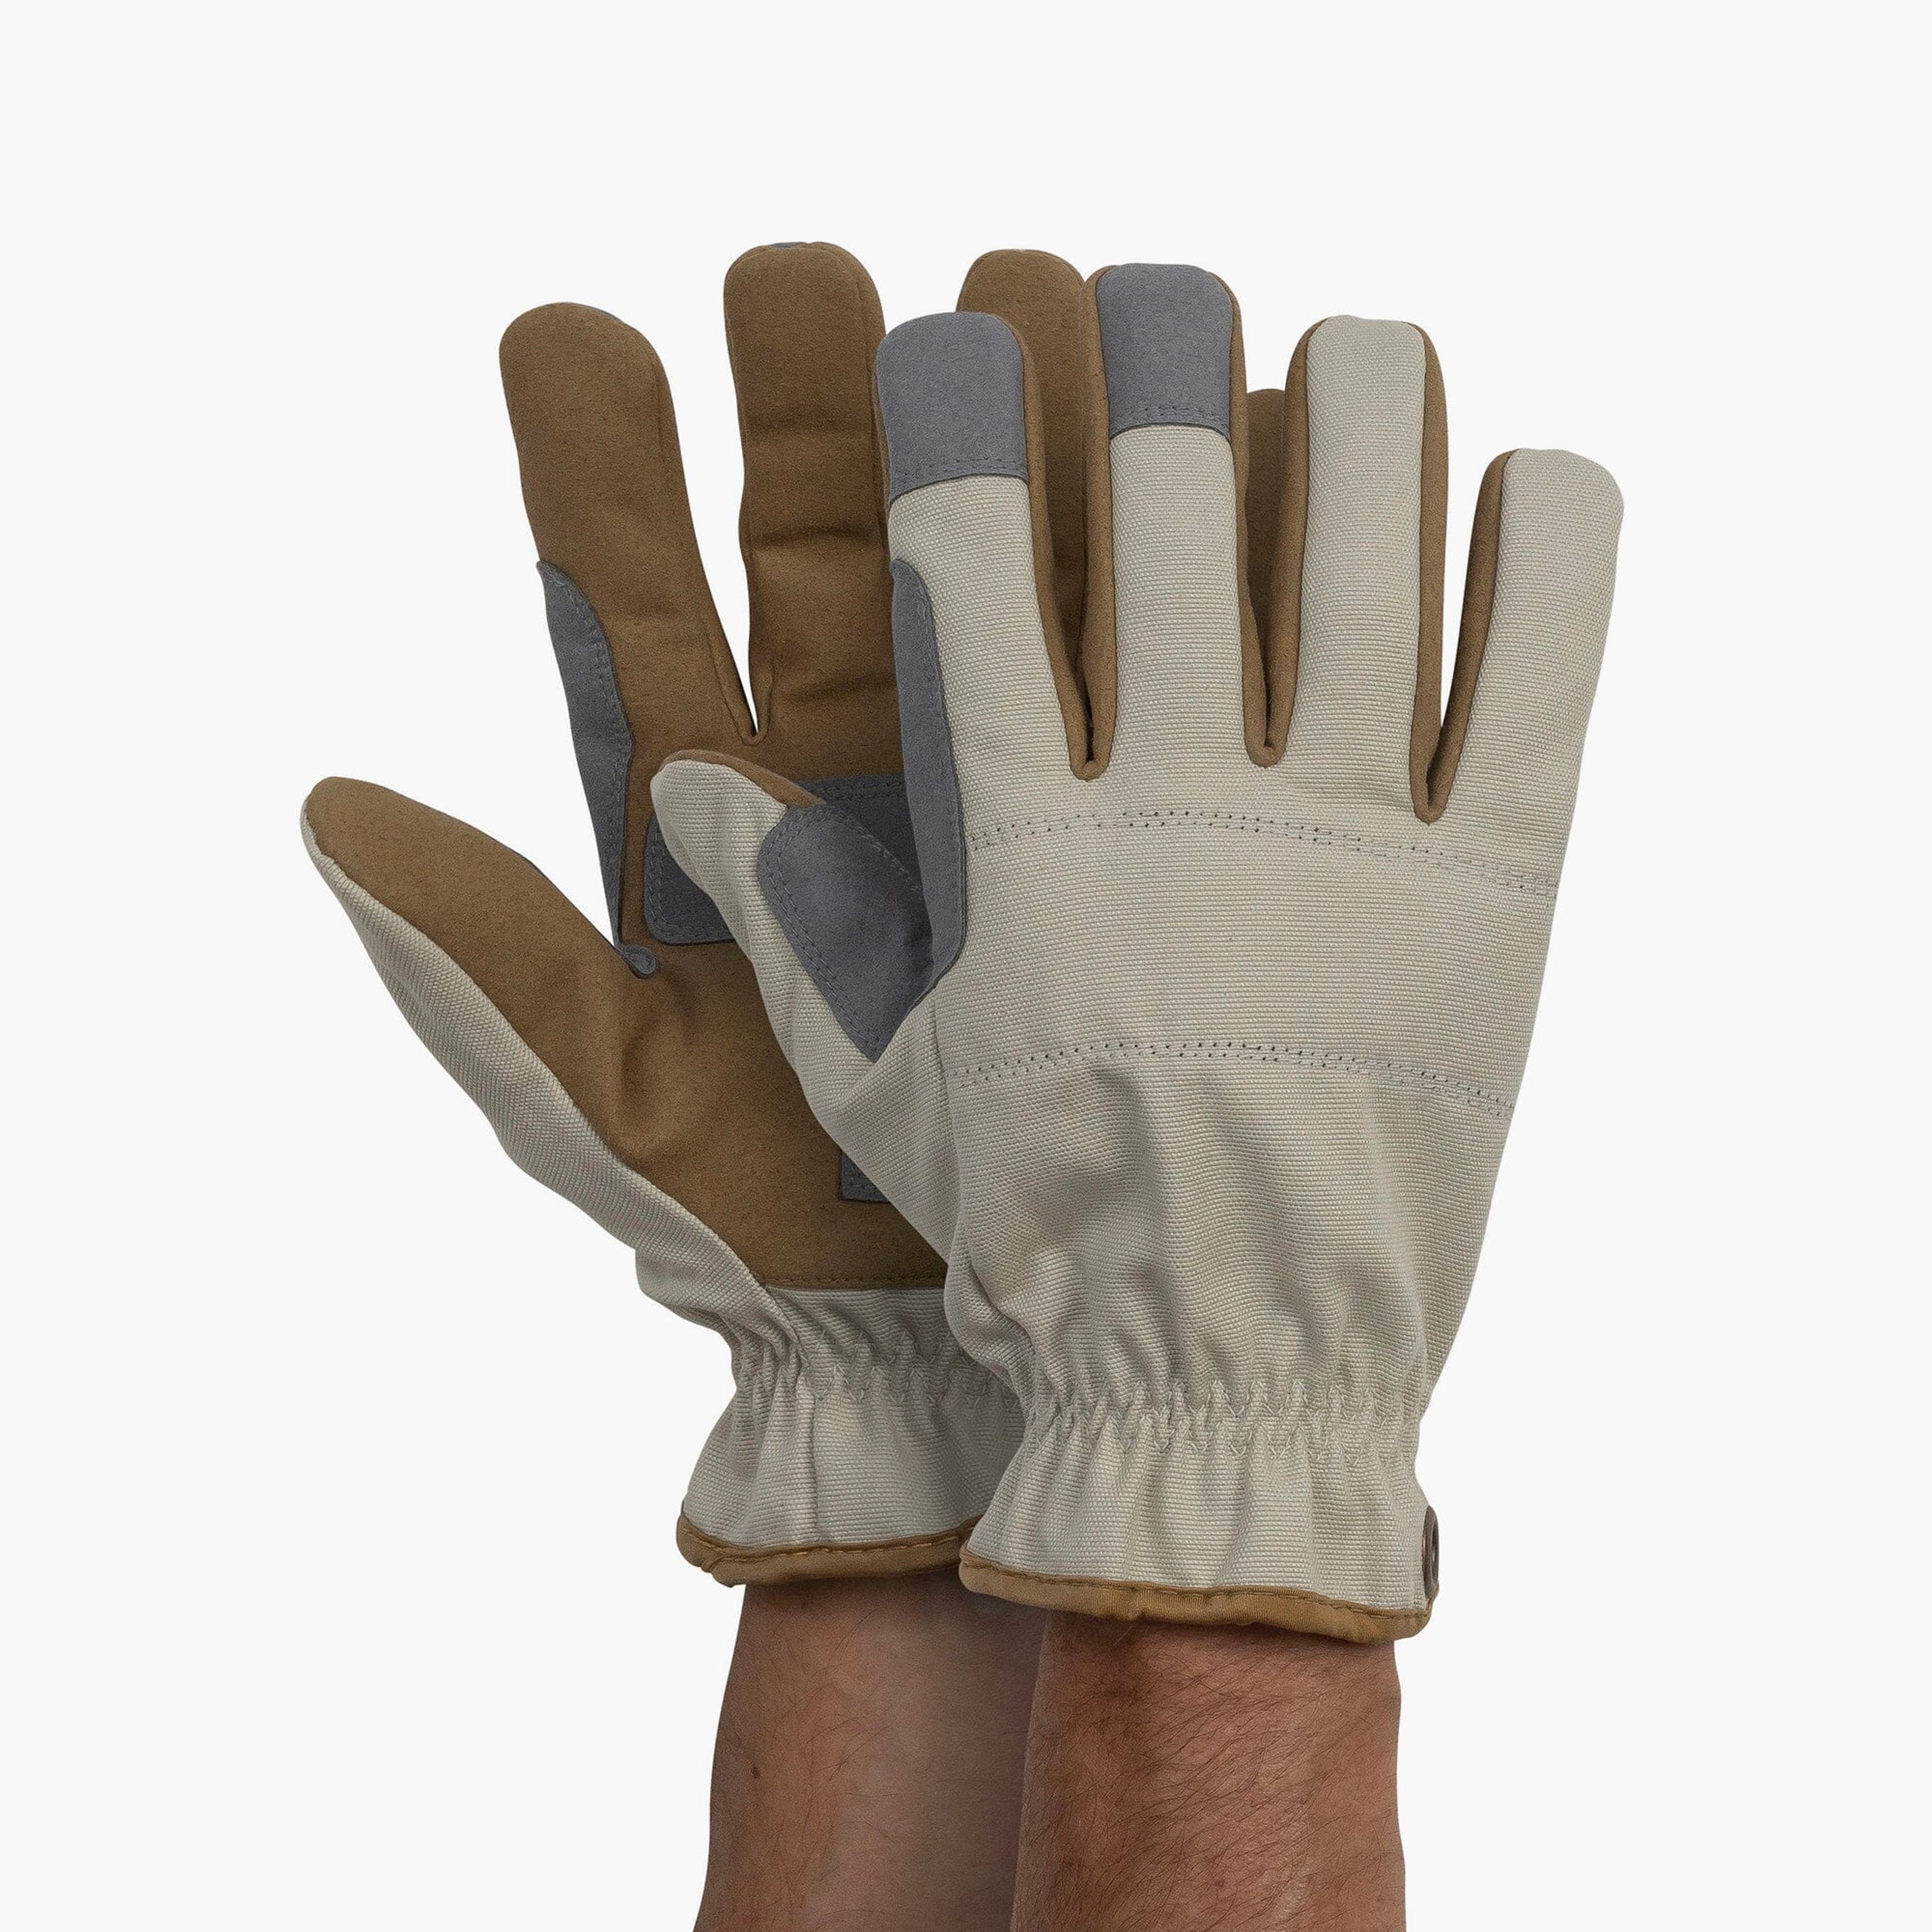 Leepa Garden Glove